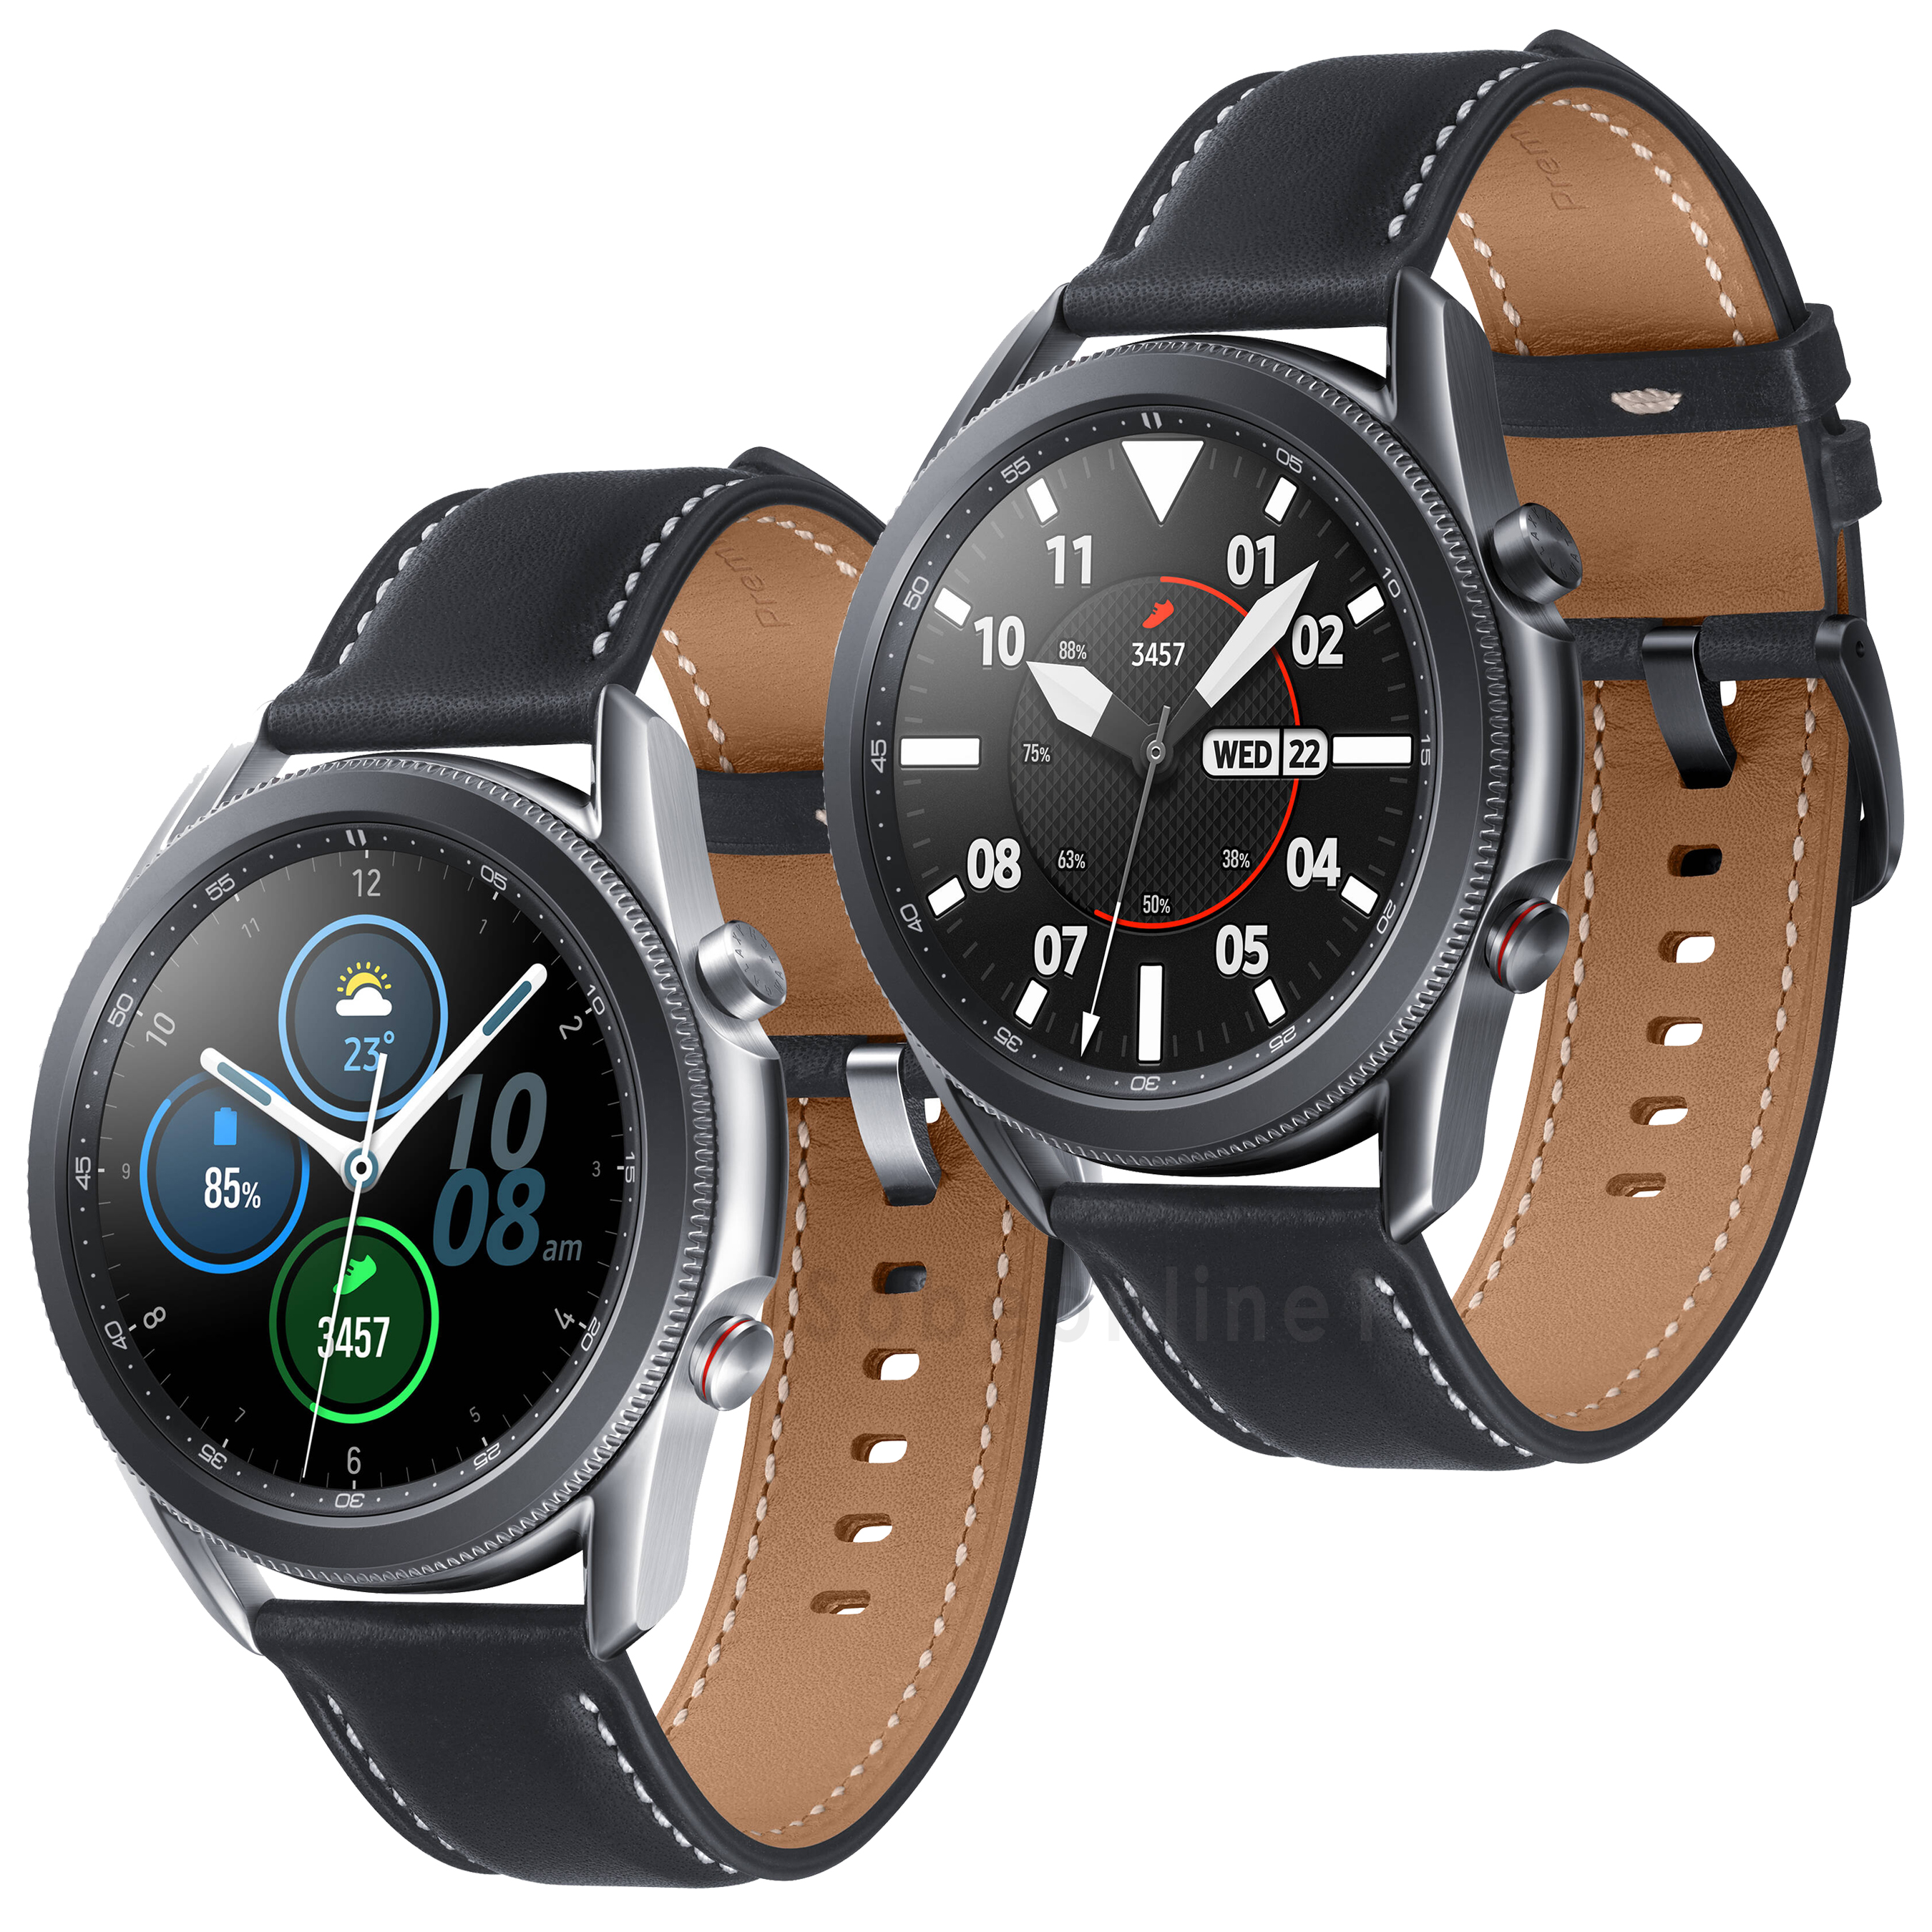 Samsung watch 45. Самсунг вотч 3 45мм. Samsung Galaxy watch 3. Samsung watch 3 45mm. Samsung Galaxy watch 3 45mm.